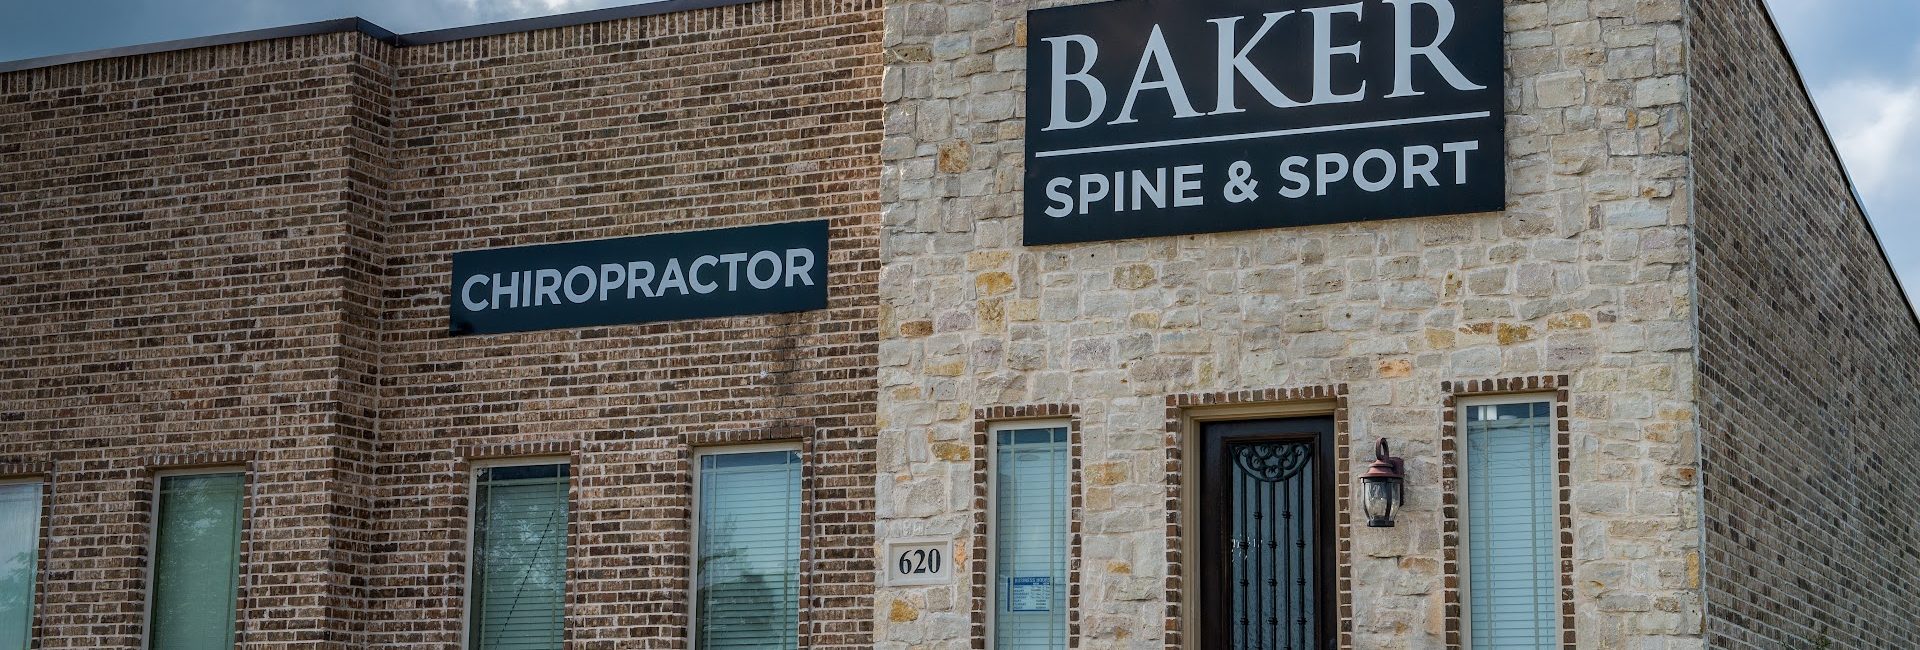 Baker Spine and Sport 2